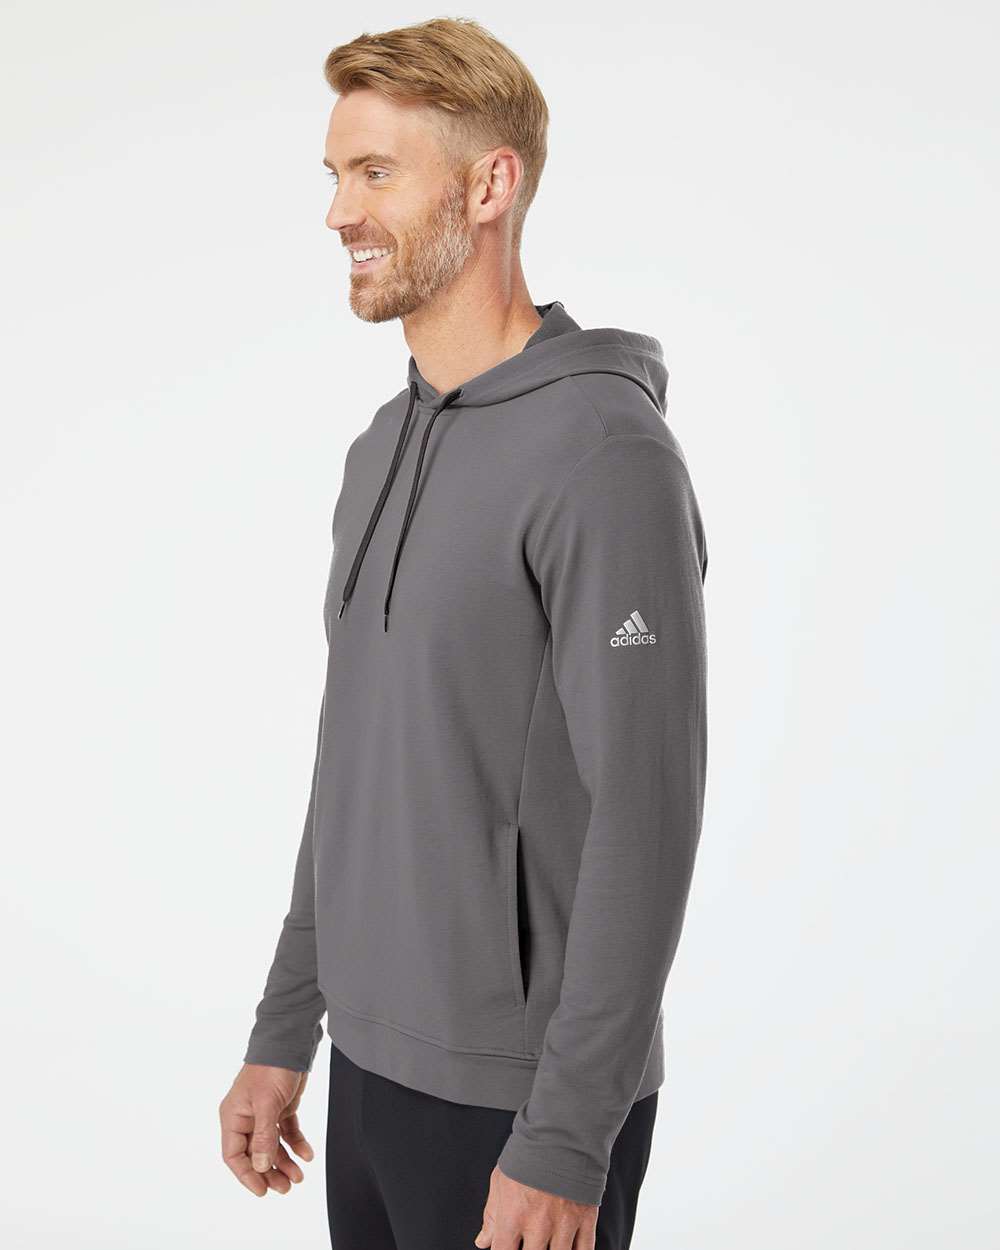 Adidas - Lightweight Hooded Sweatshirt - A450